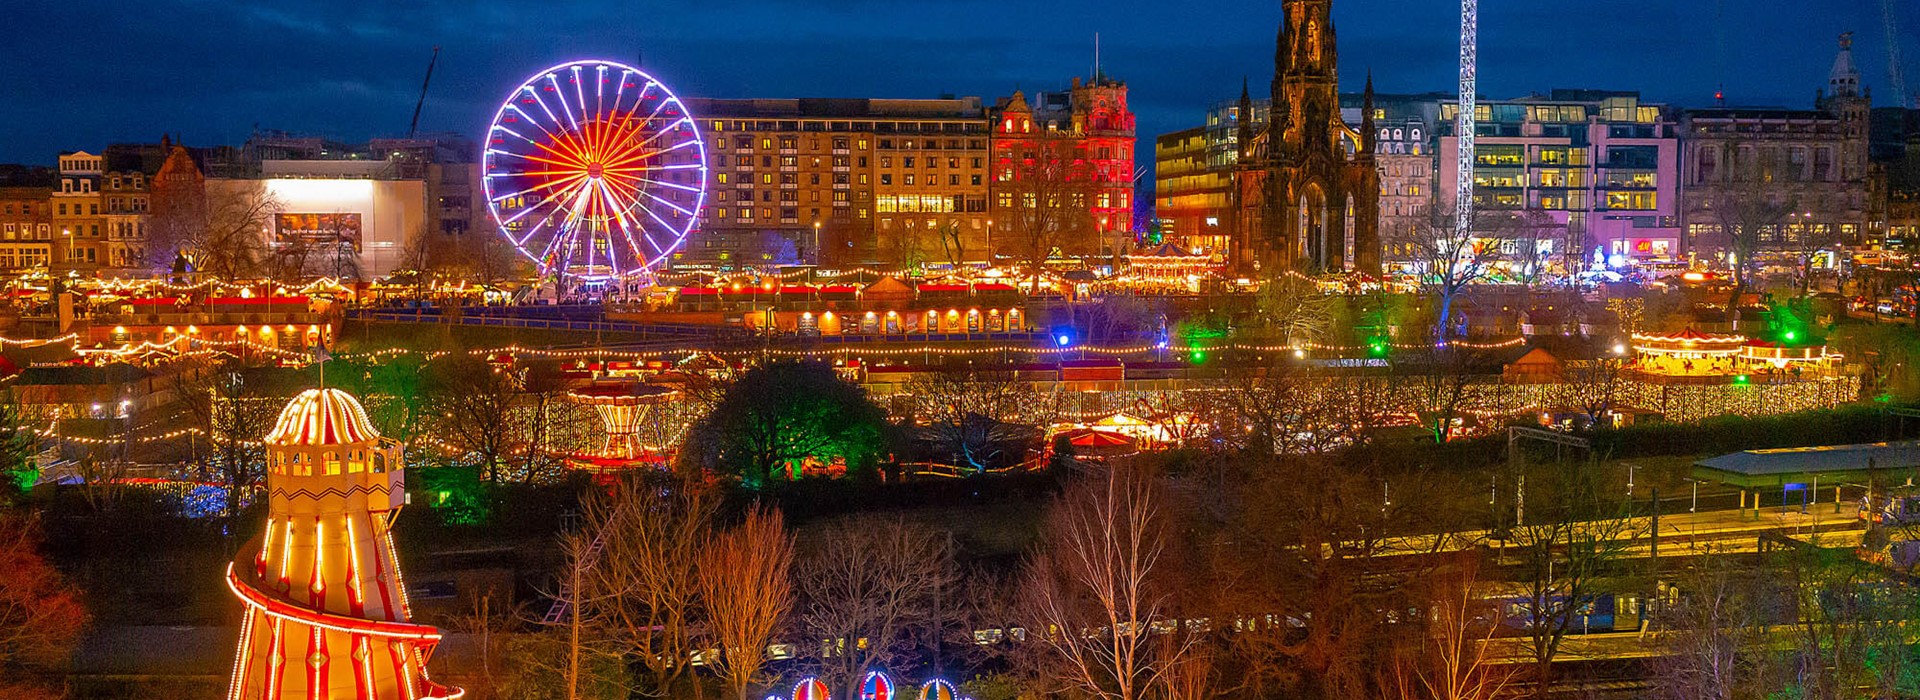 tourhub | Newmarket Holidays | Edinburgh Christmas Markets 